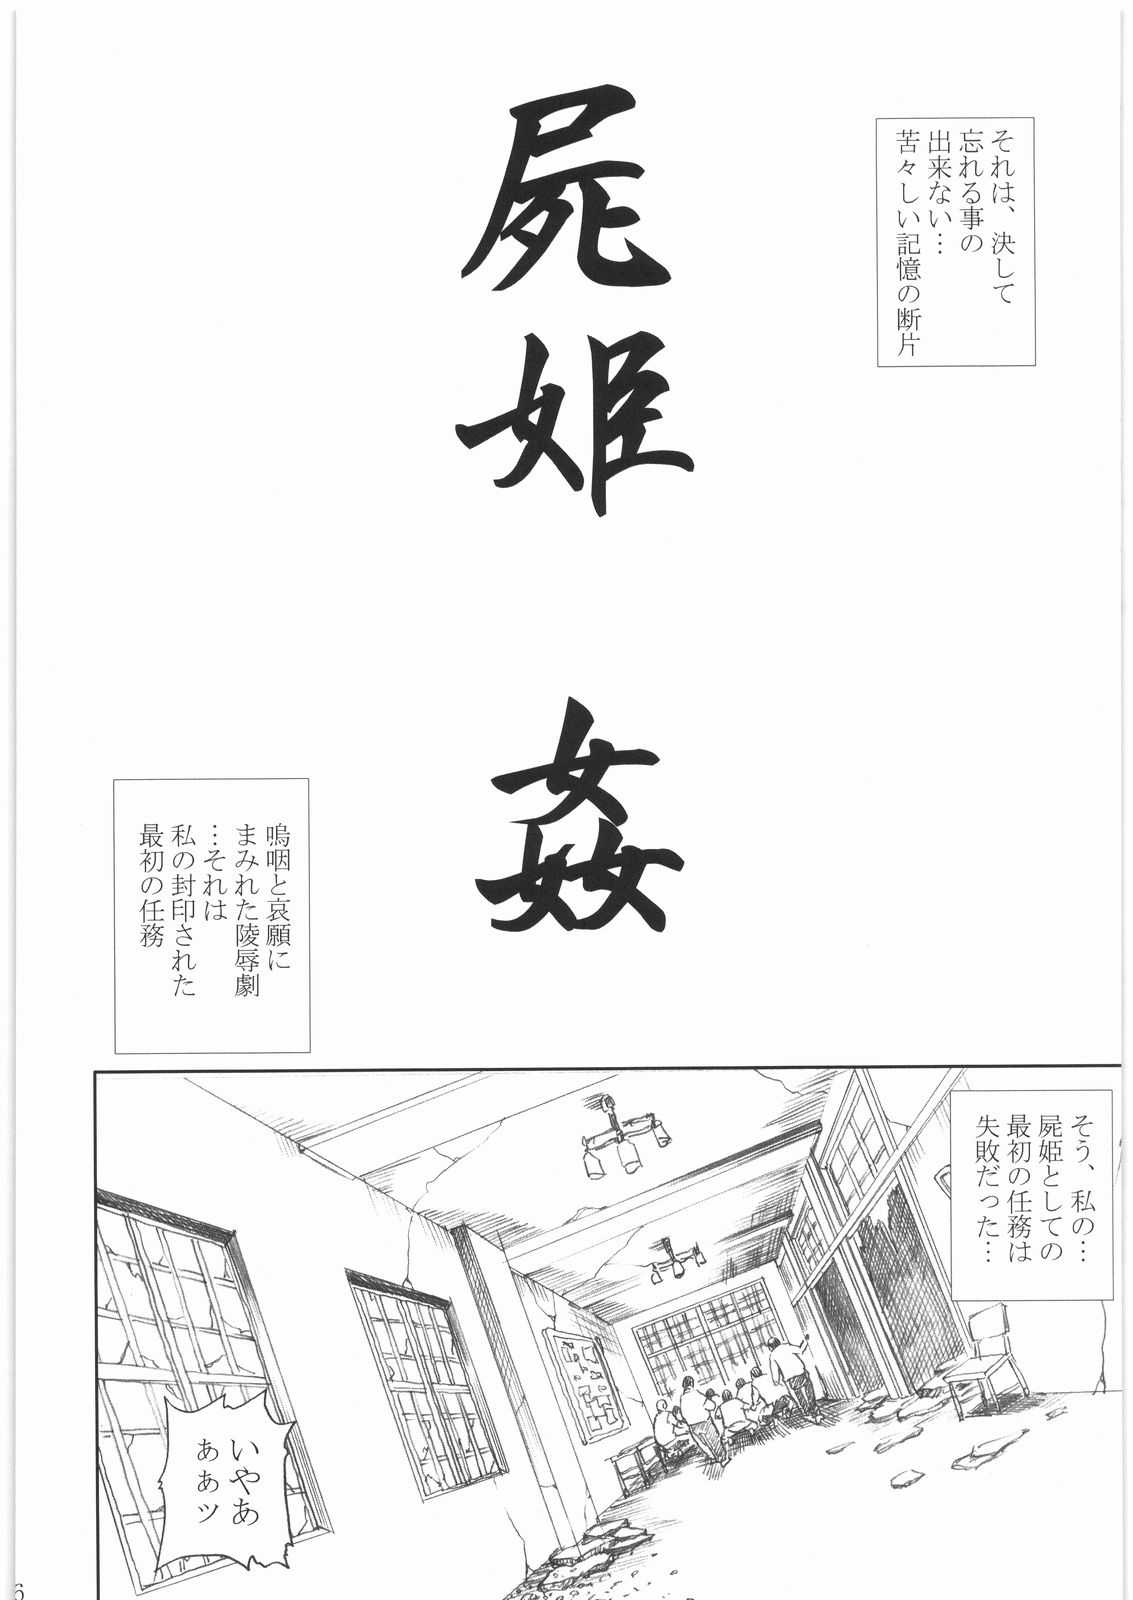 [Abura Katabura (Papipurin)] Shikabane Hime Kan (Shikabane Hime) [2009-03-06] [あぶらかたぶら (ぱぴぷりん)] 屍姫 姦 (屍姫) [2009-03-06]